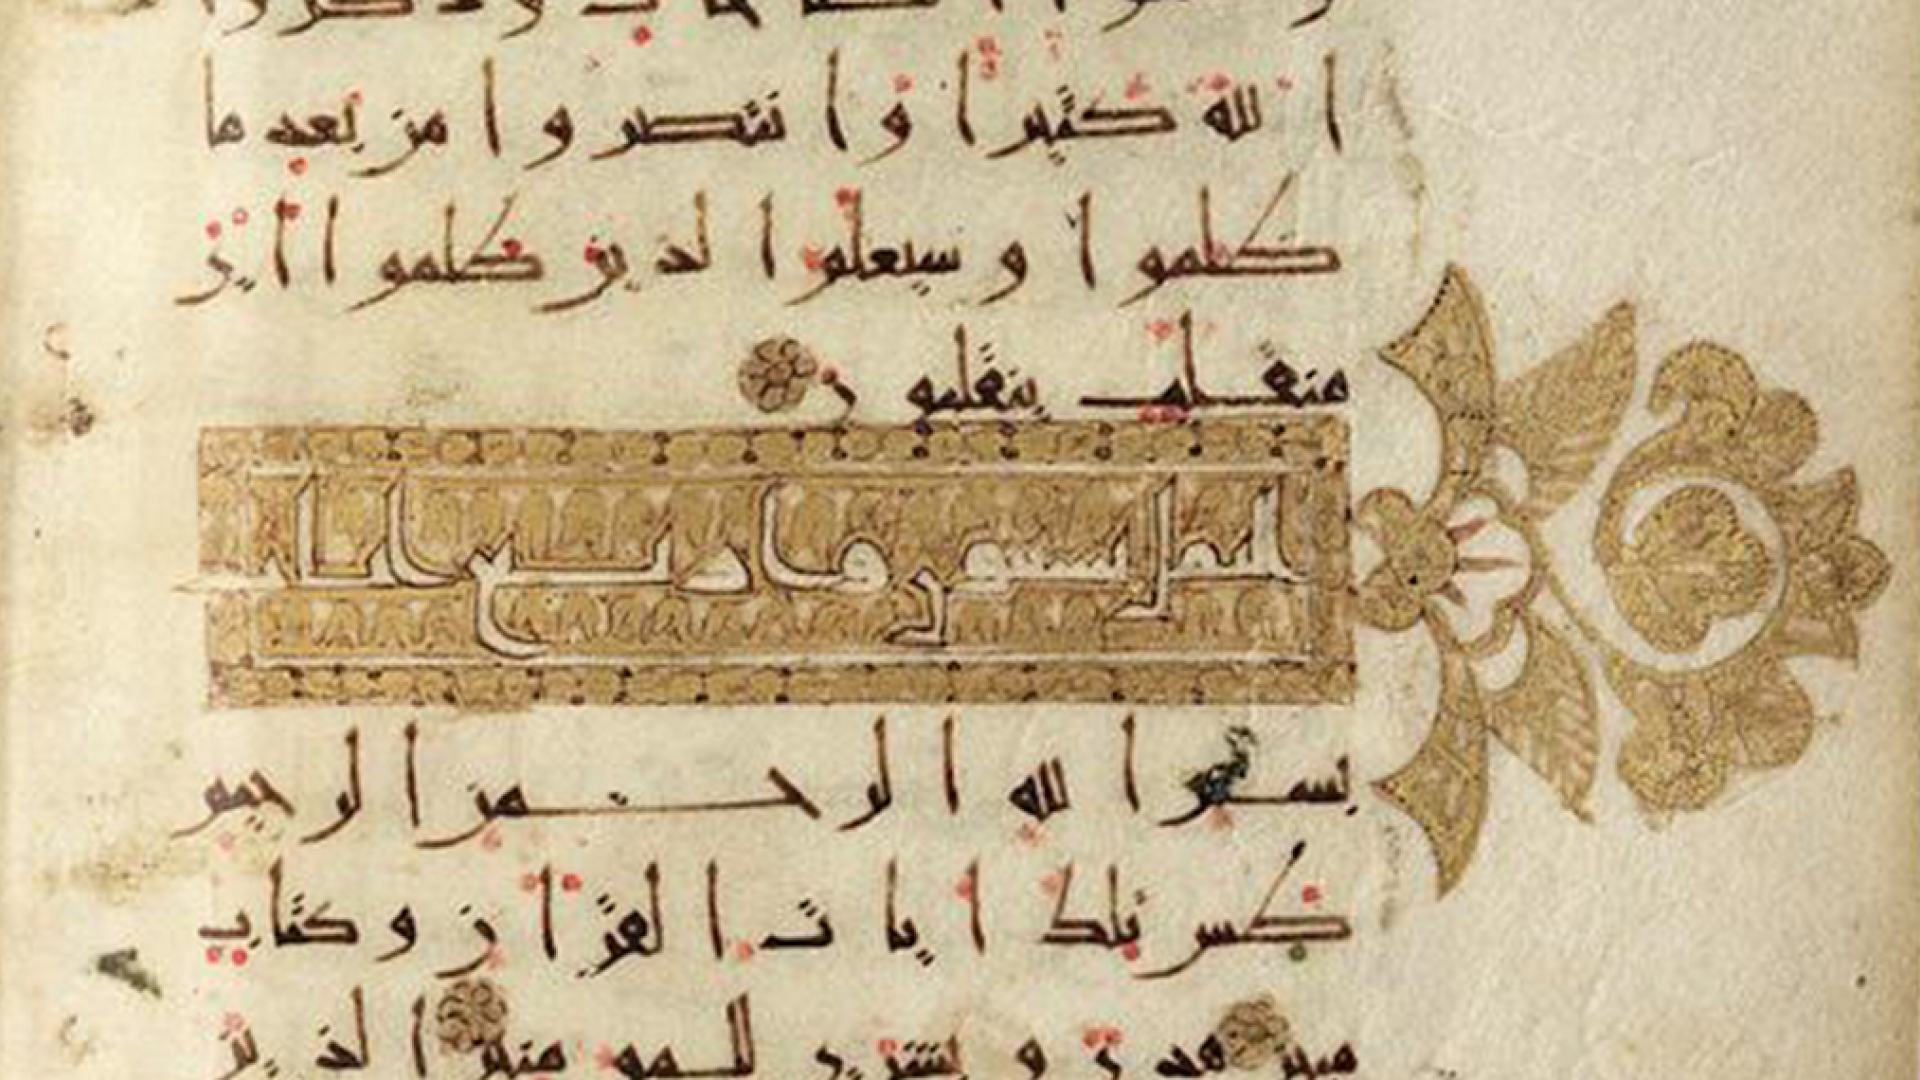 7th part of a ten-part Qur'an in "broken cursive" script.